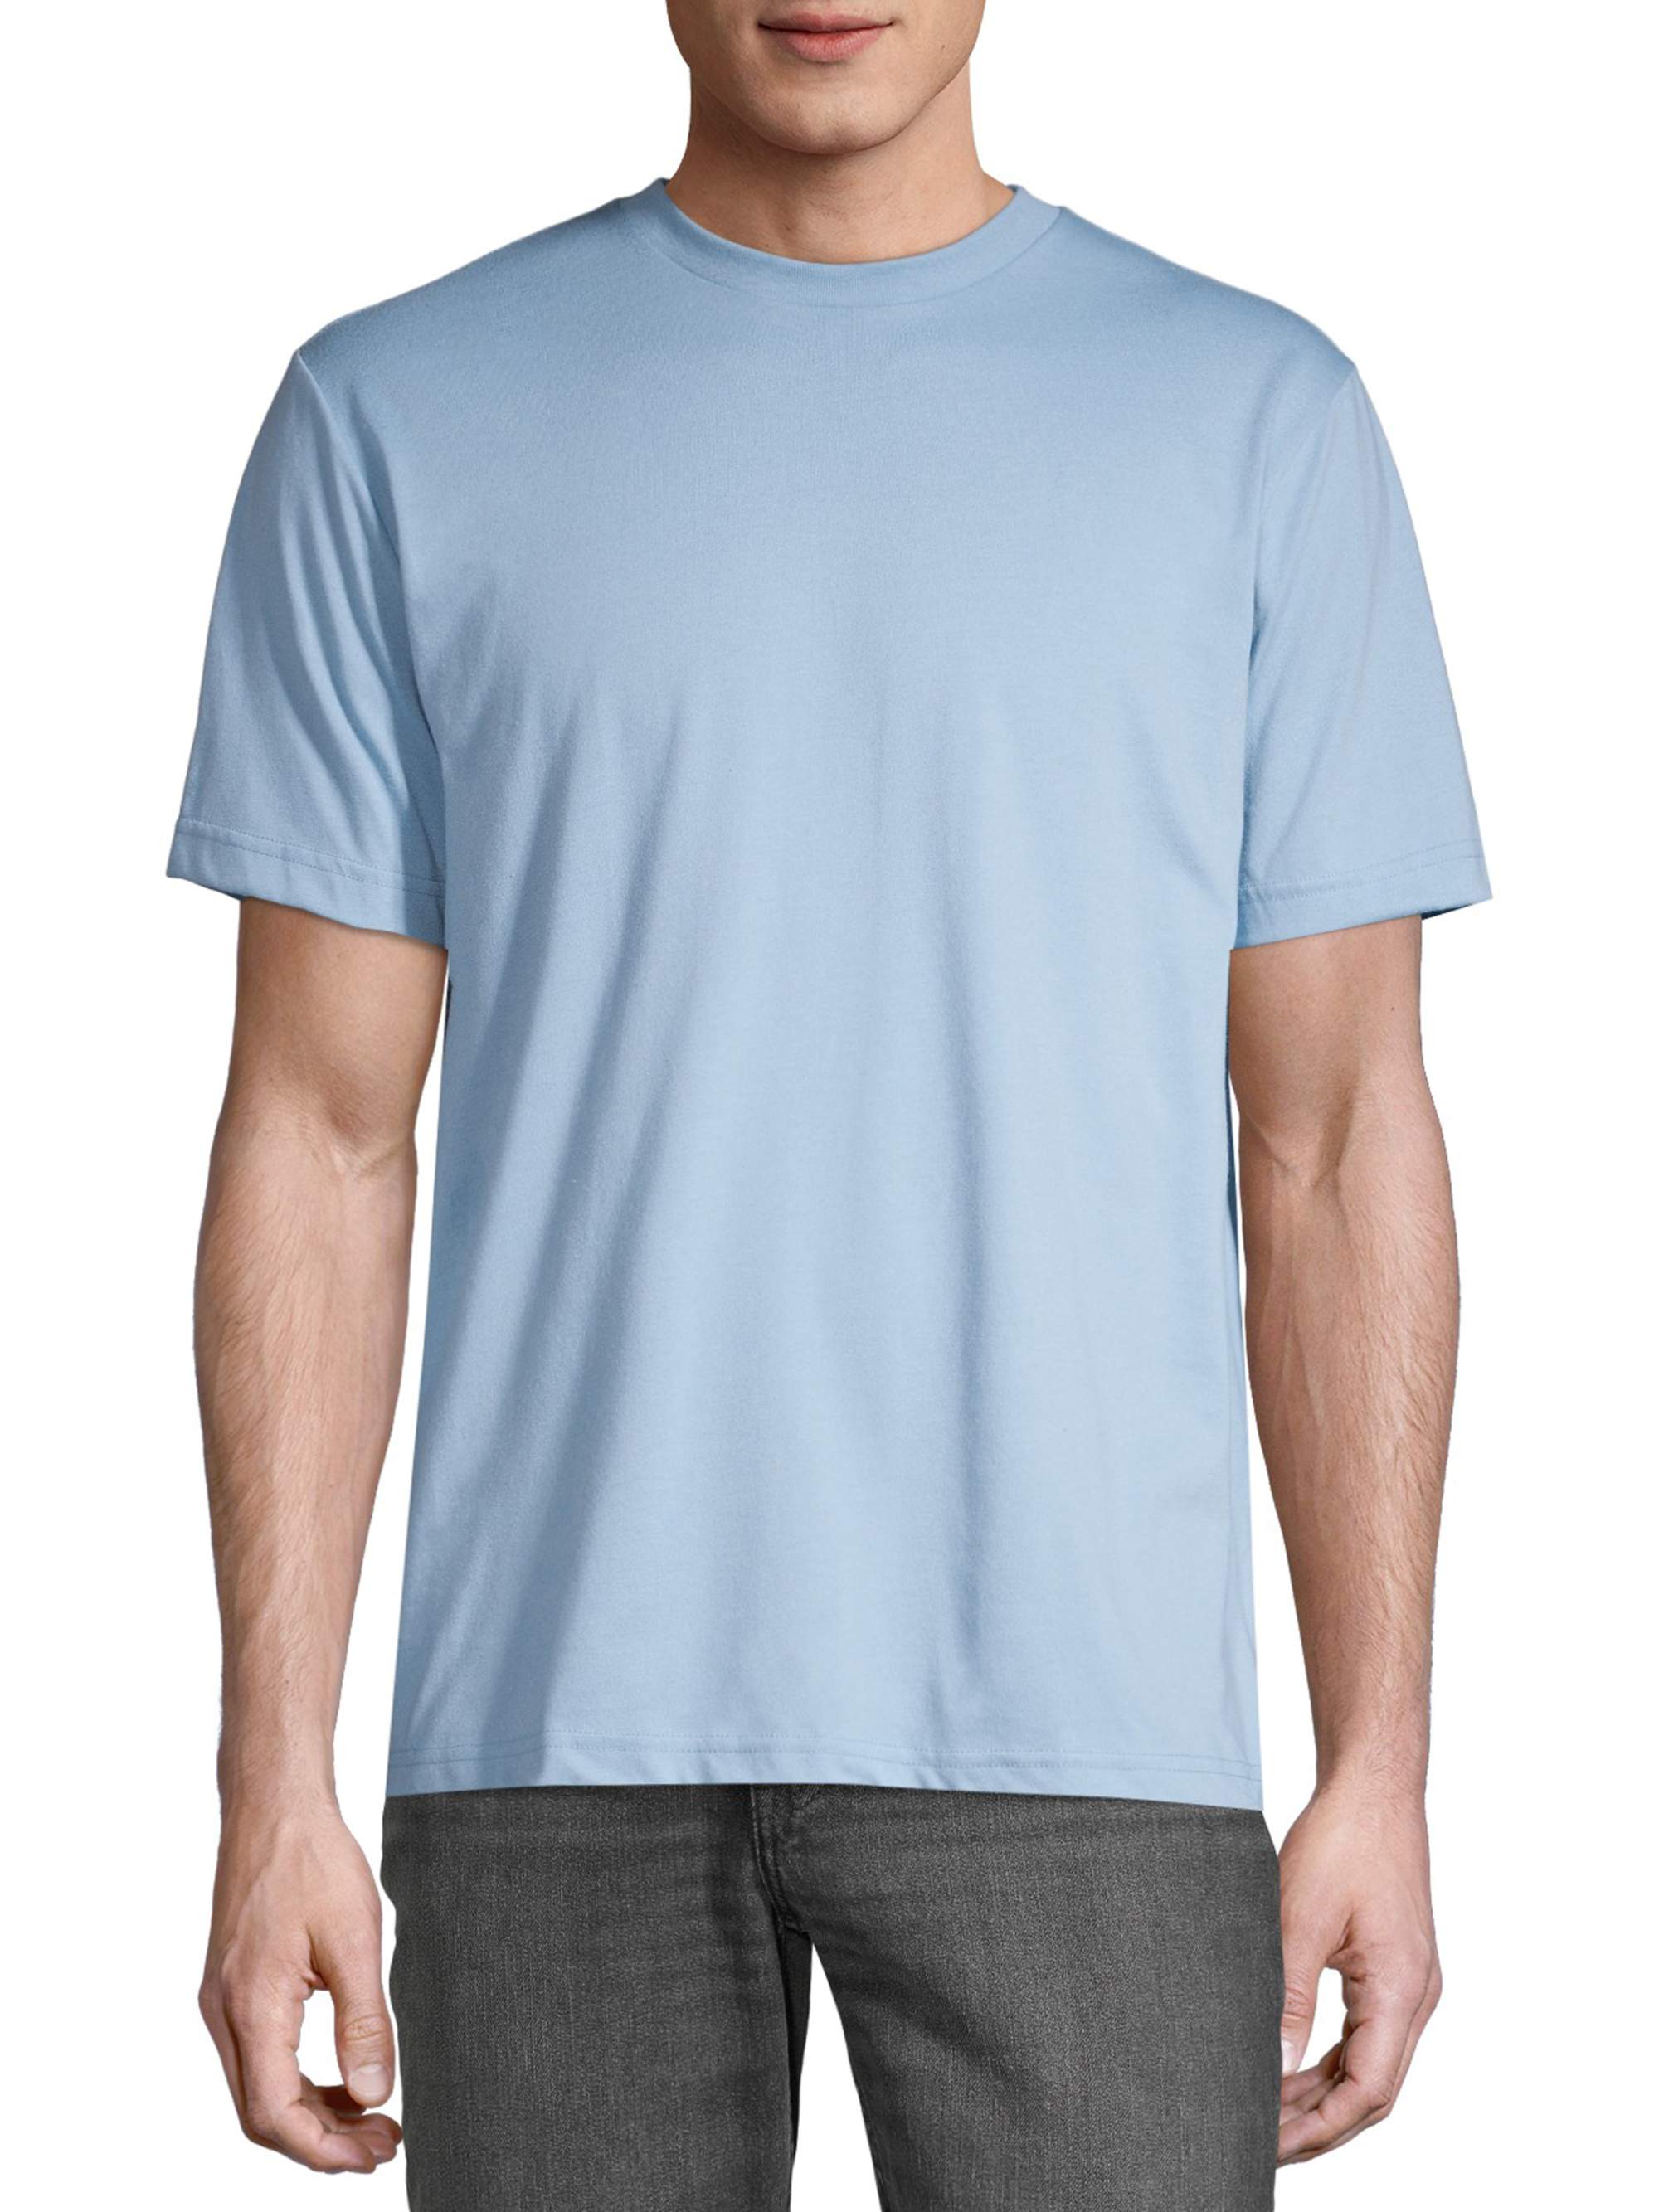 George Men's and Big Men's Short Sleeve Crewneck T-Shirt - image 1 of 5